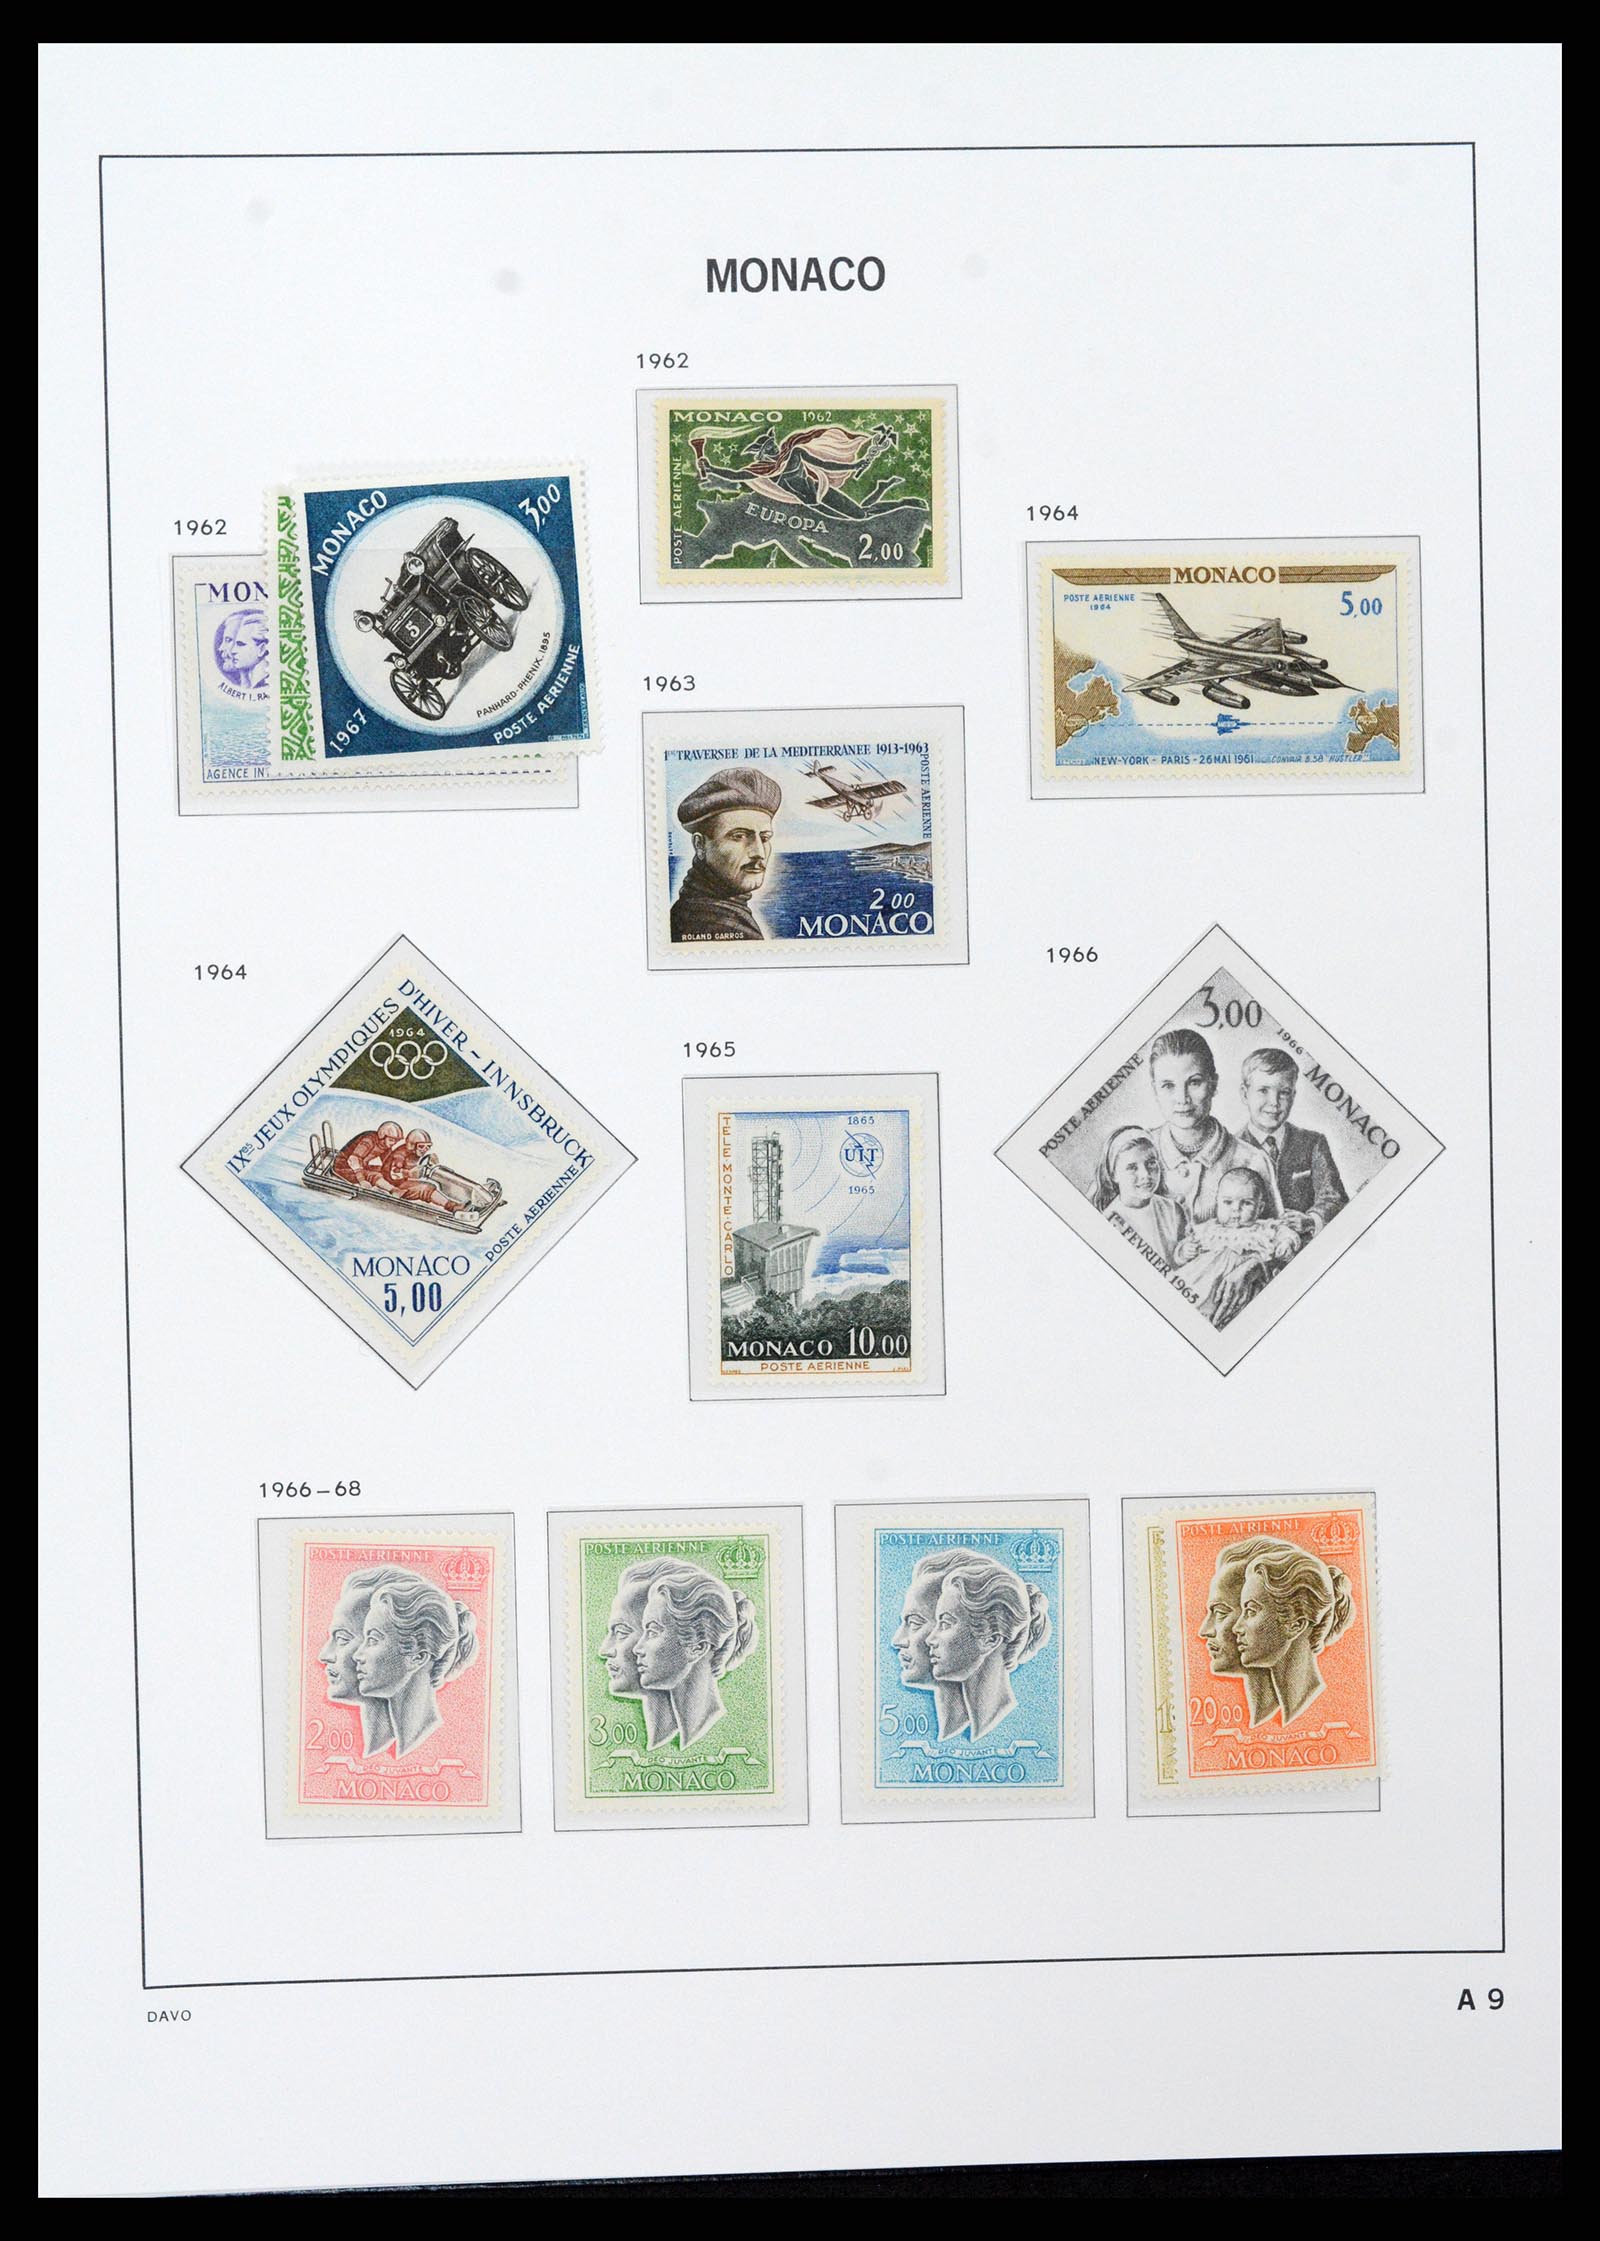 37279 066 - Stamp collection 37279 Monaco 1885-1969.